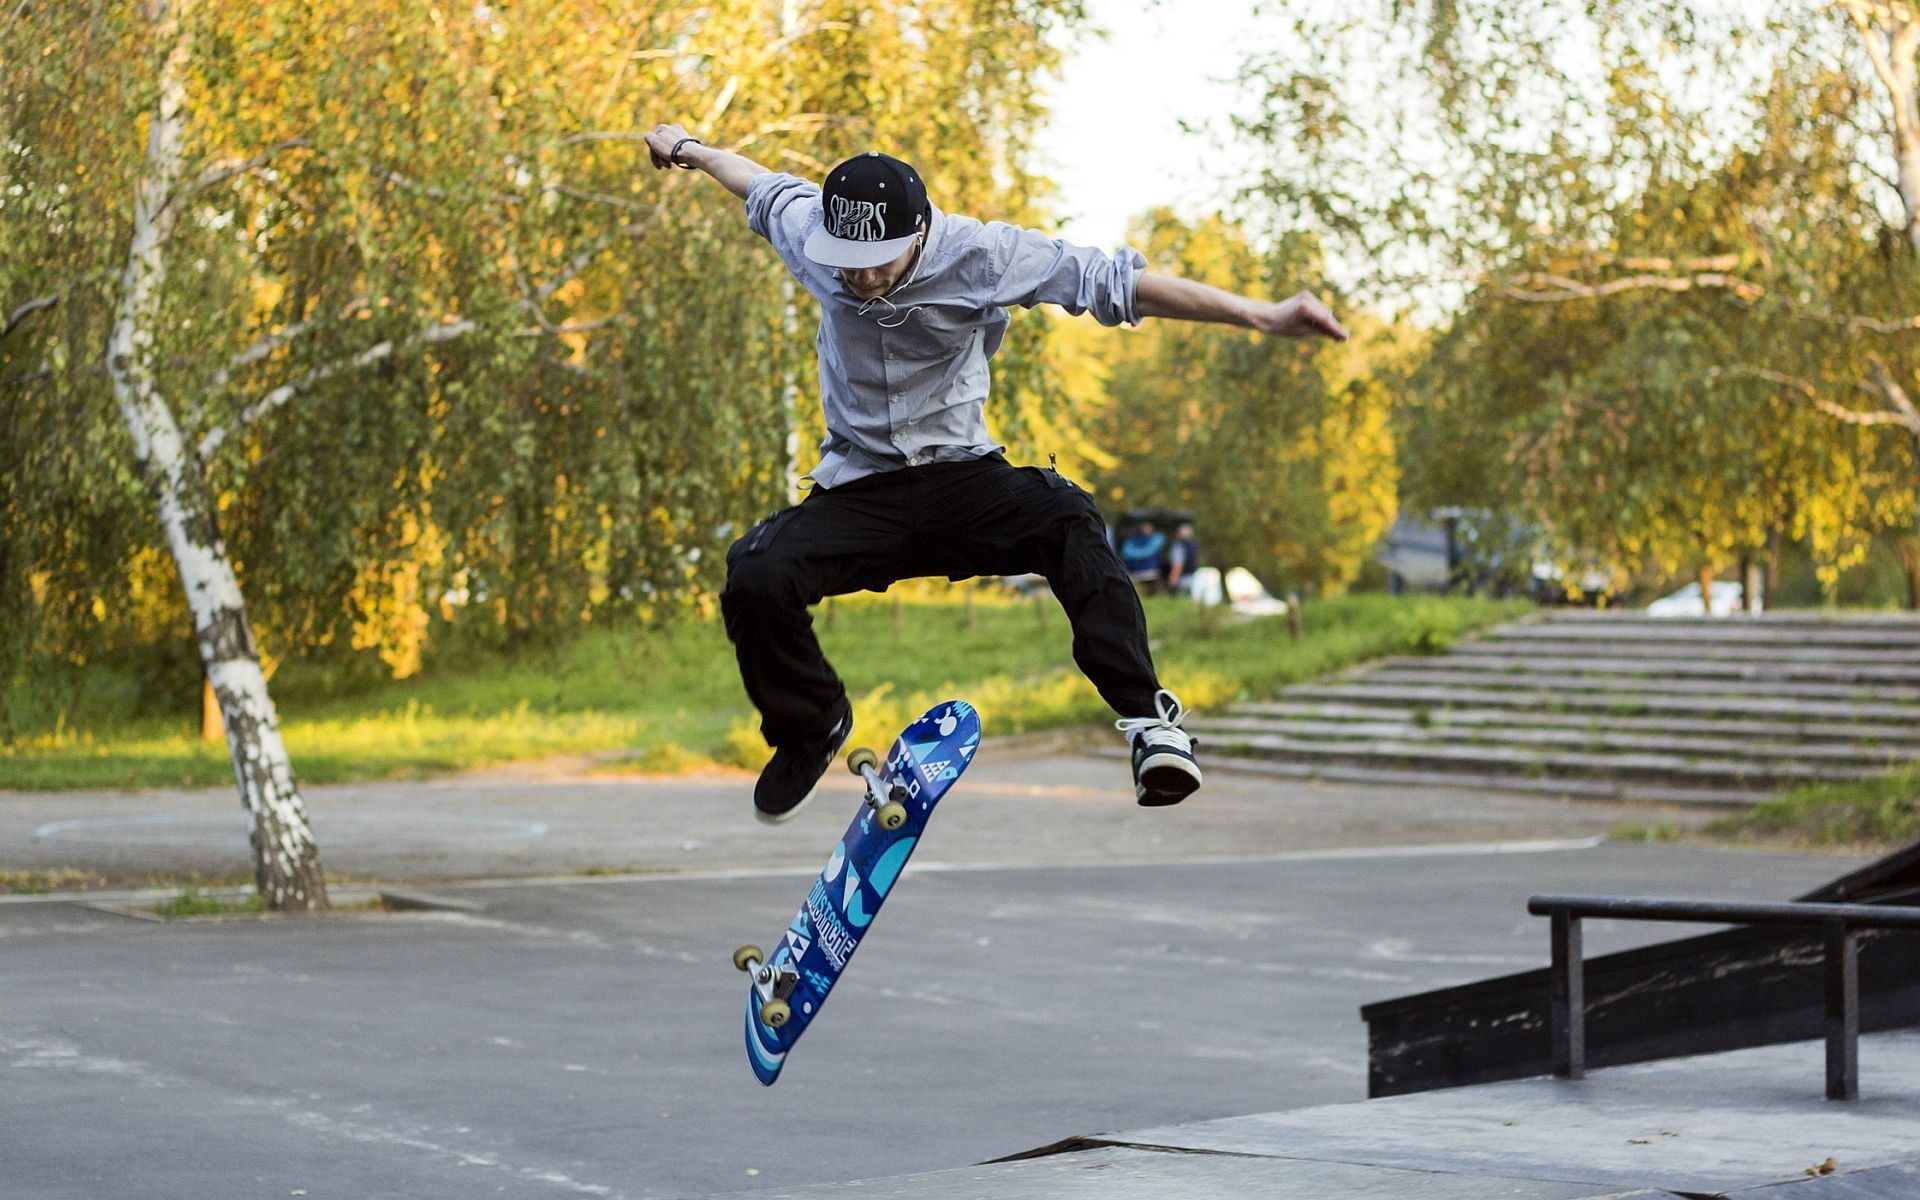 Skateboarding: Skateboard Flip Trick, Competitive performance action sport. 1920x1200 HD Background.